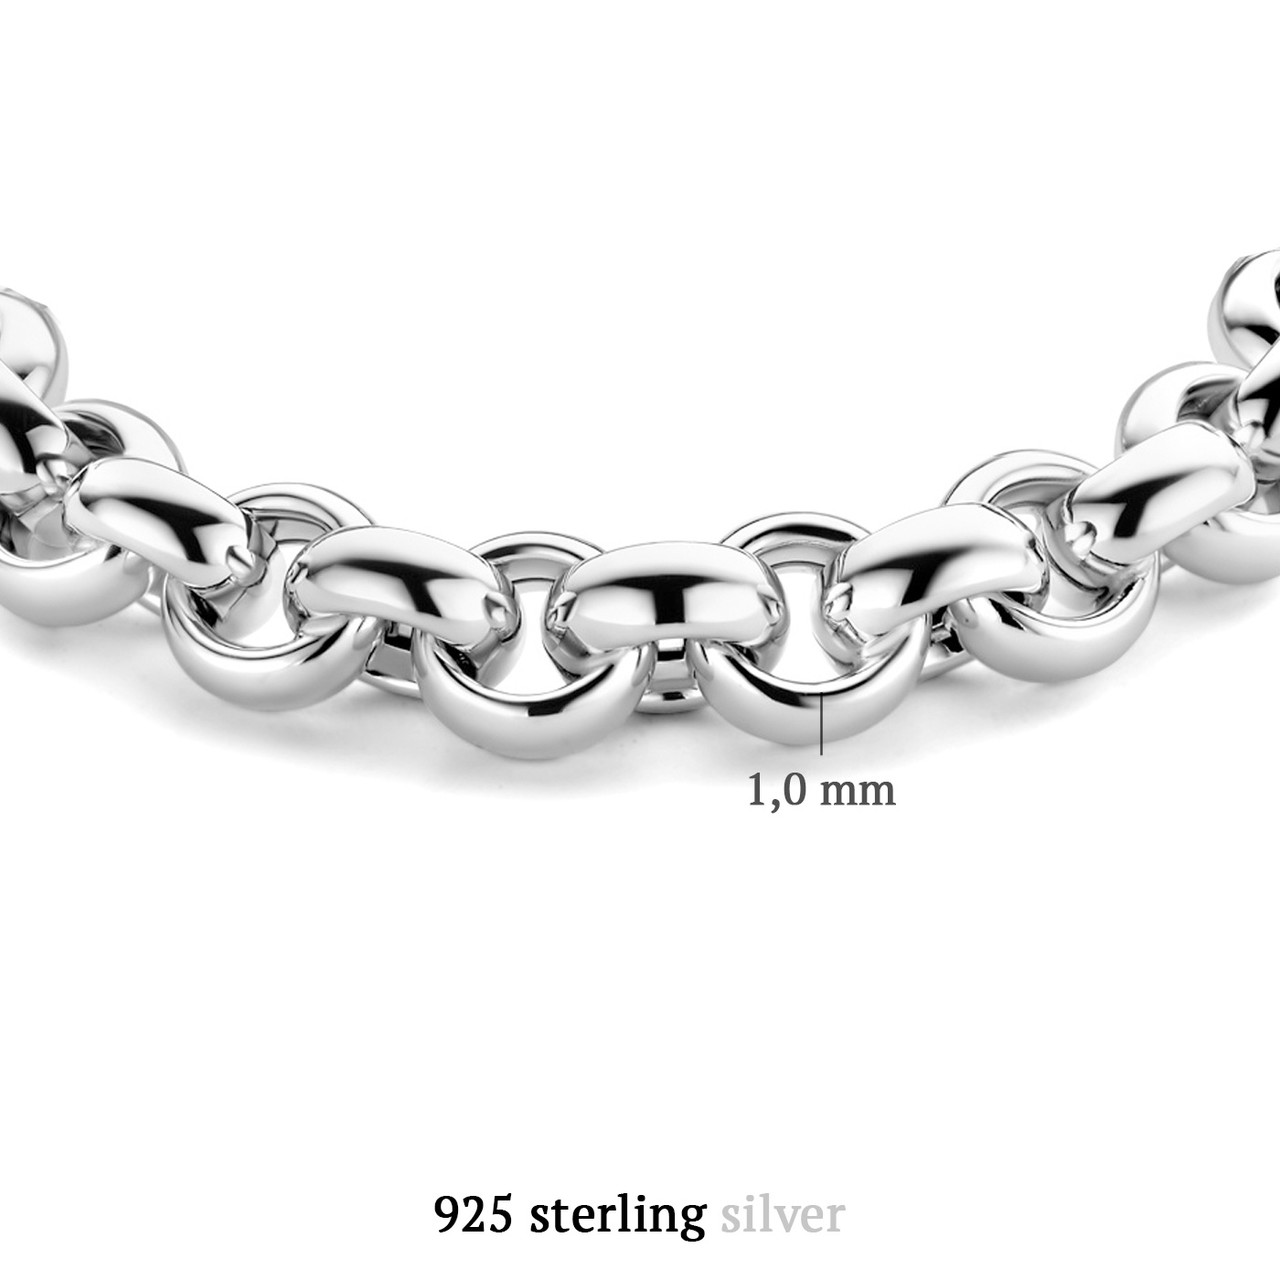 Parte Di Me - 925 sterling link PDM32011 silver bracelet